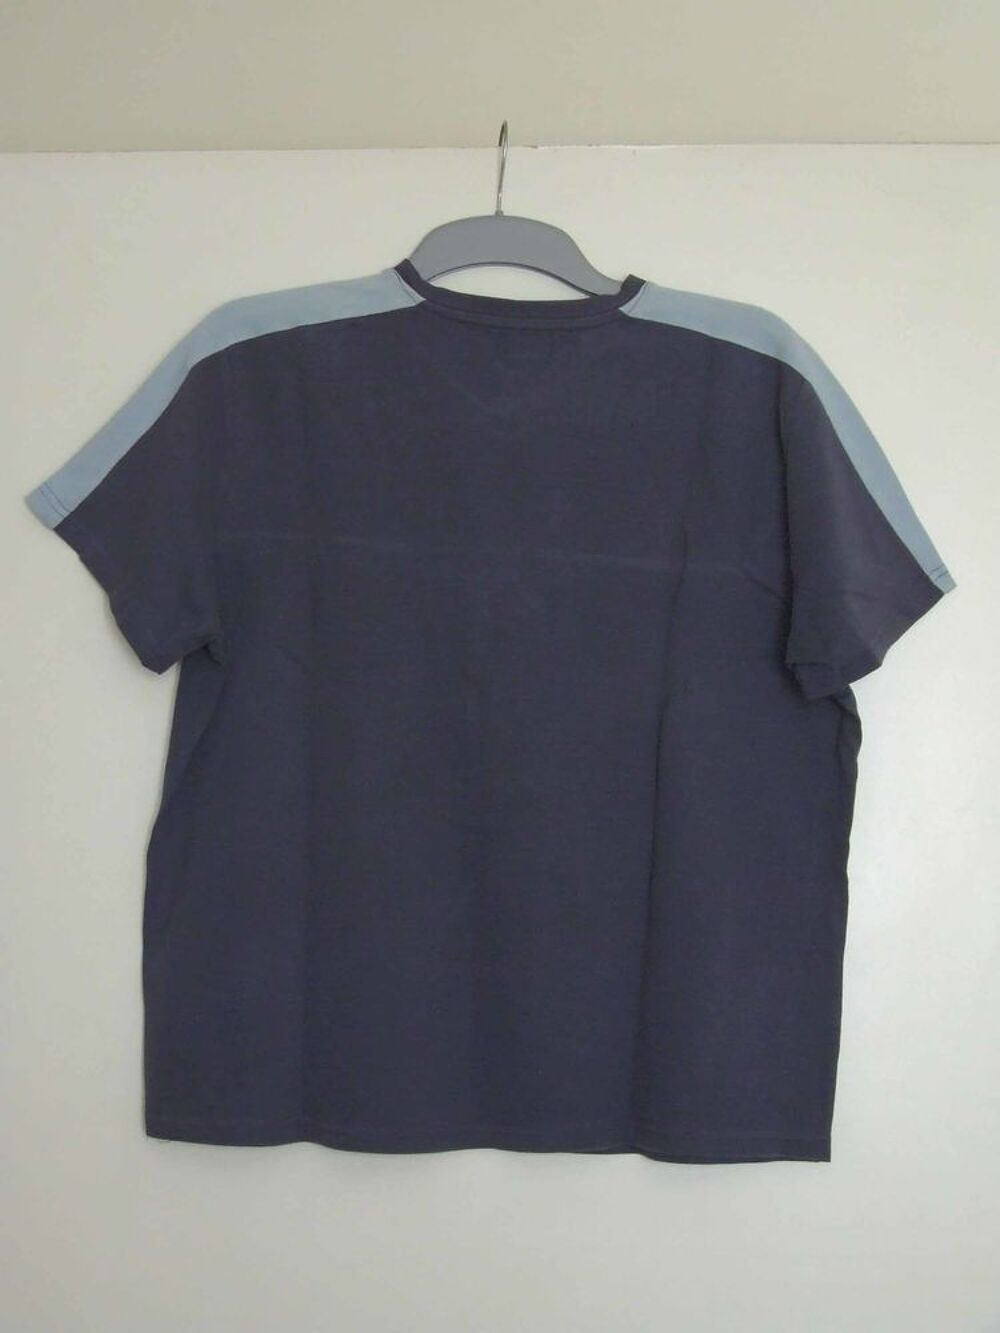 Tee-shirt col en V, BRICE, Bleu marine, Taille L, TBE Vtements